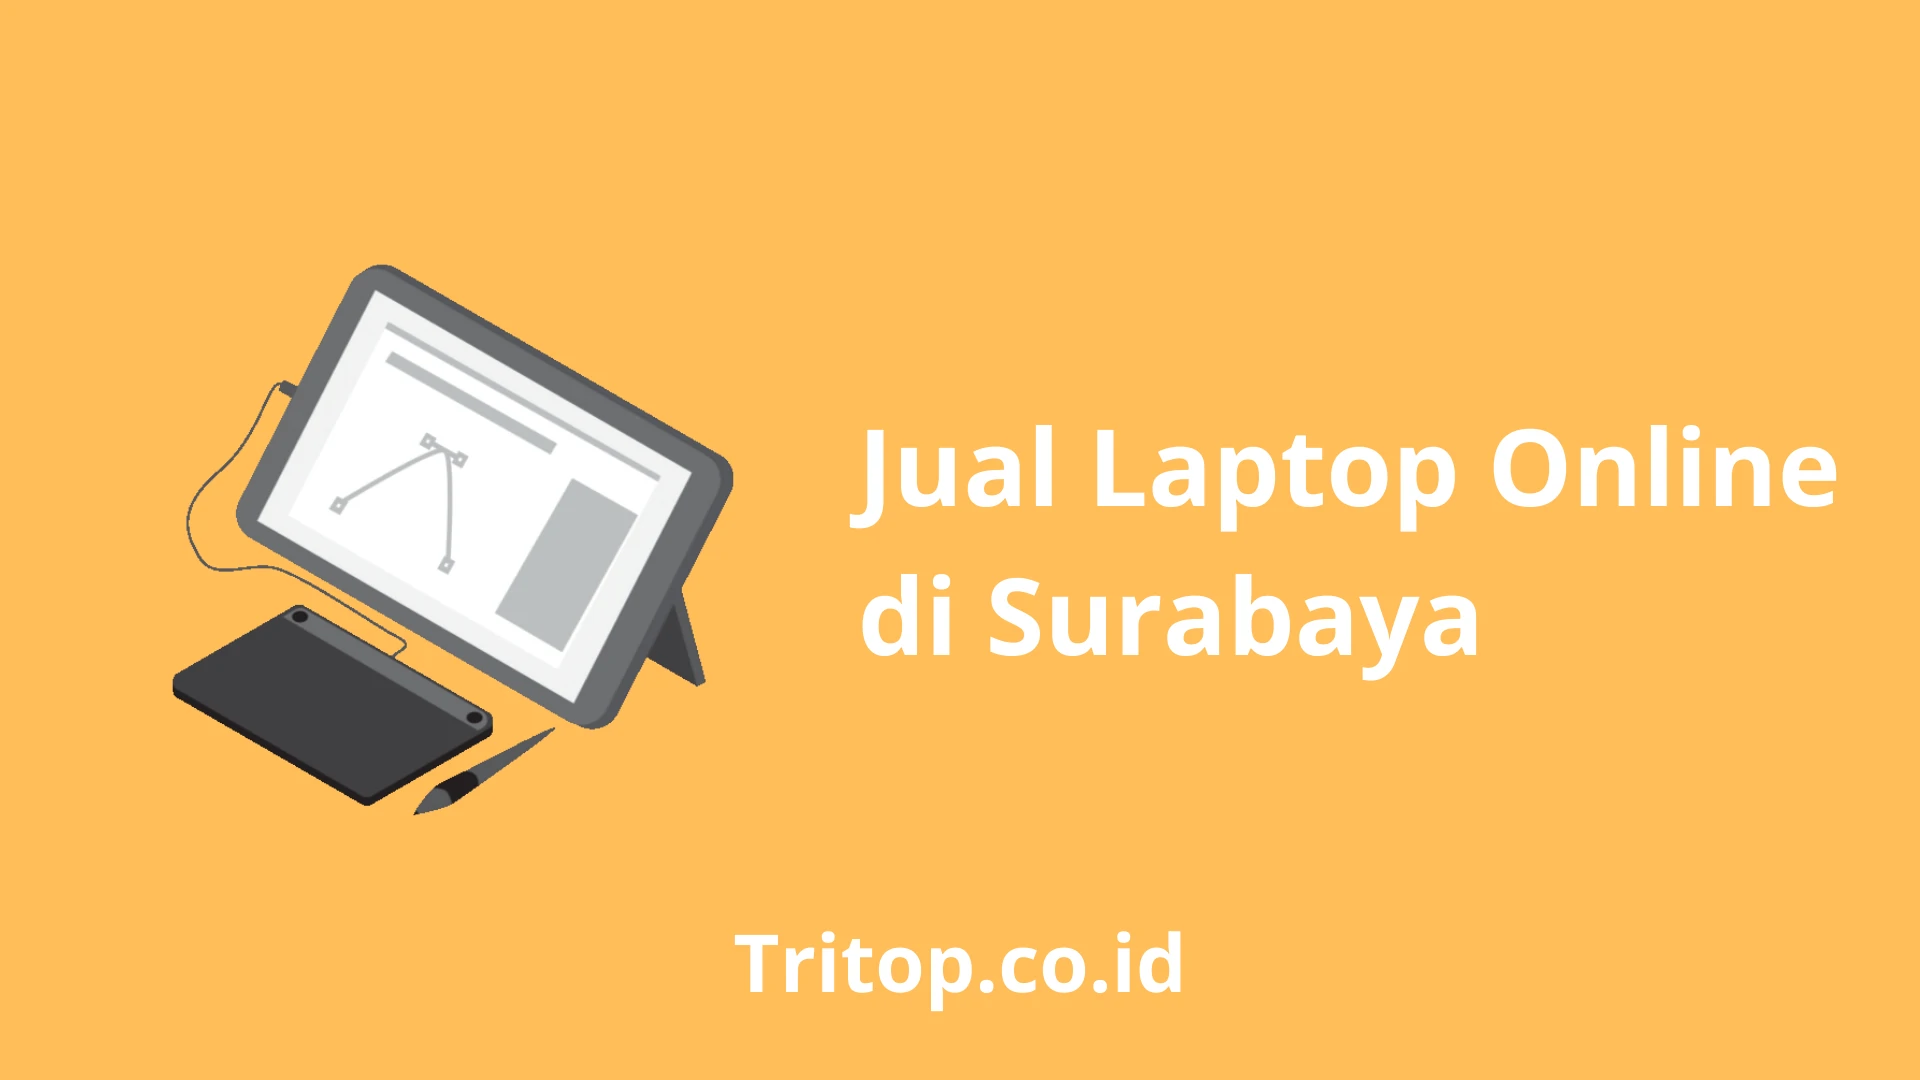 Jual Laptop Online di Surabaya tritop.co.id